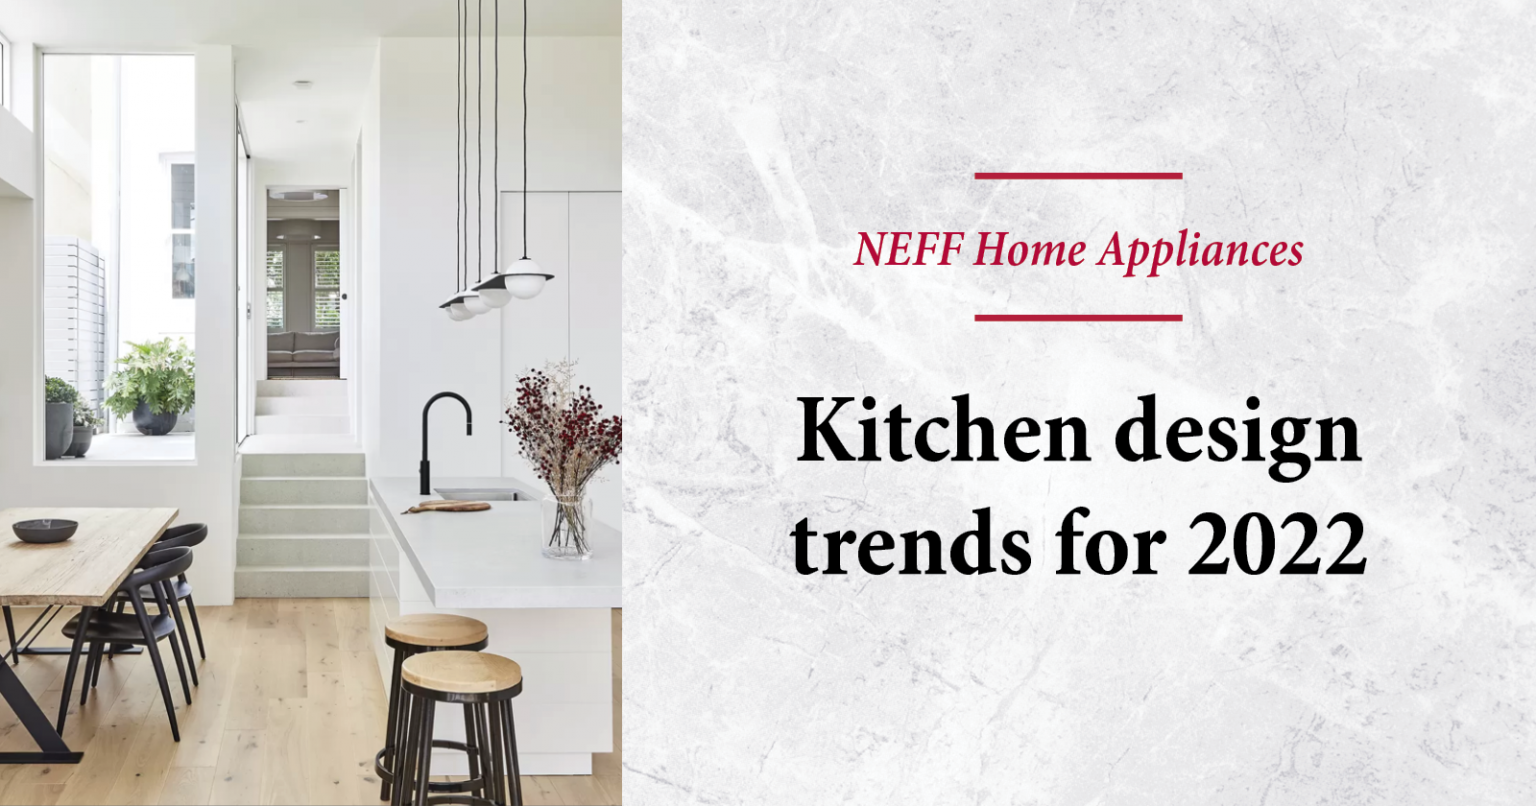 Kitchen design trends for 2022 | The Neff Kitchen